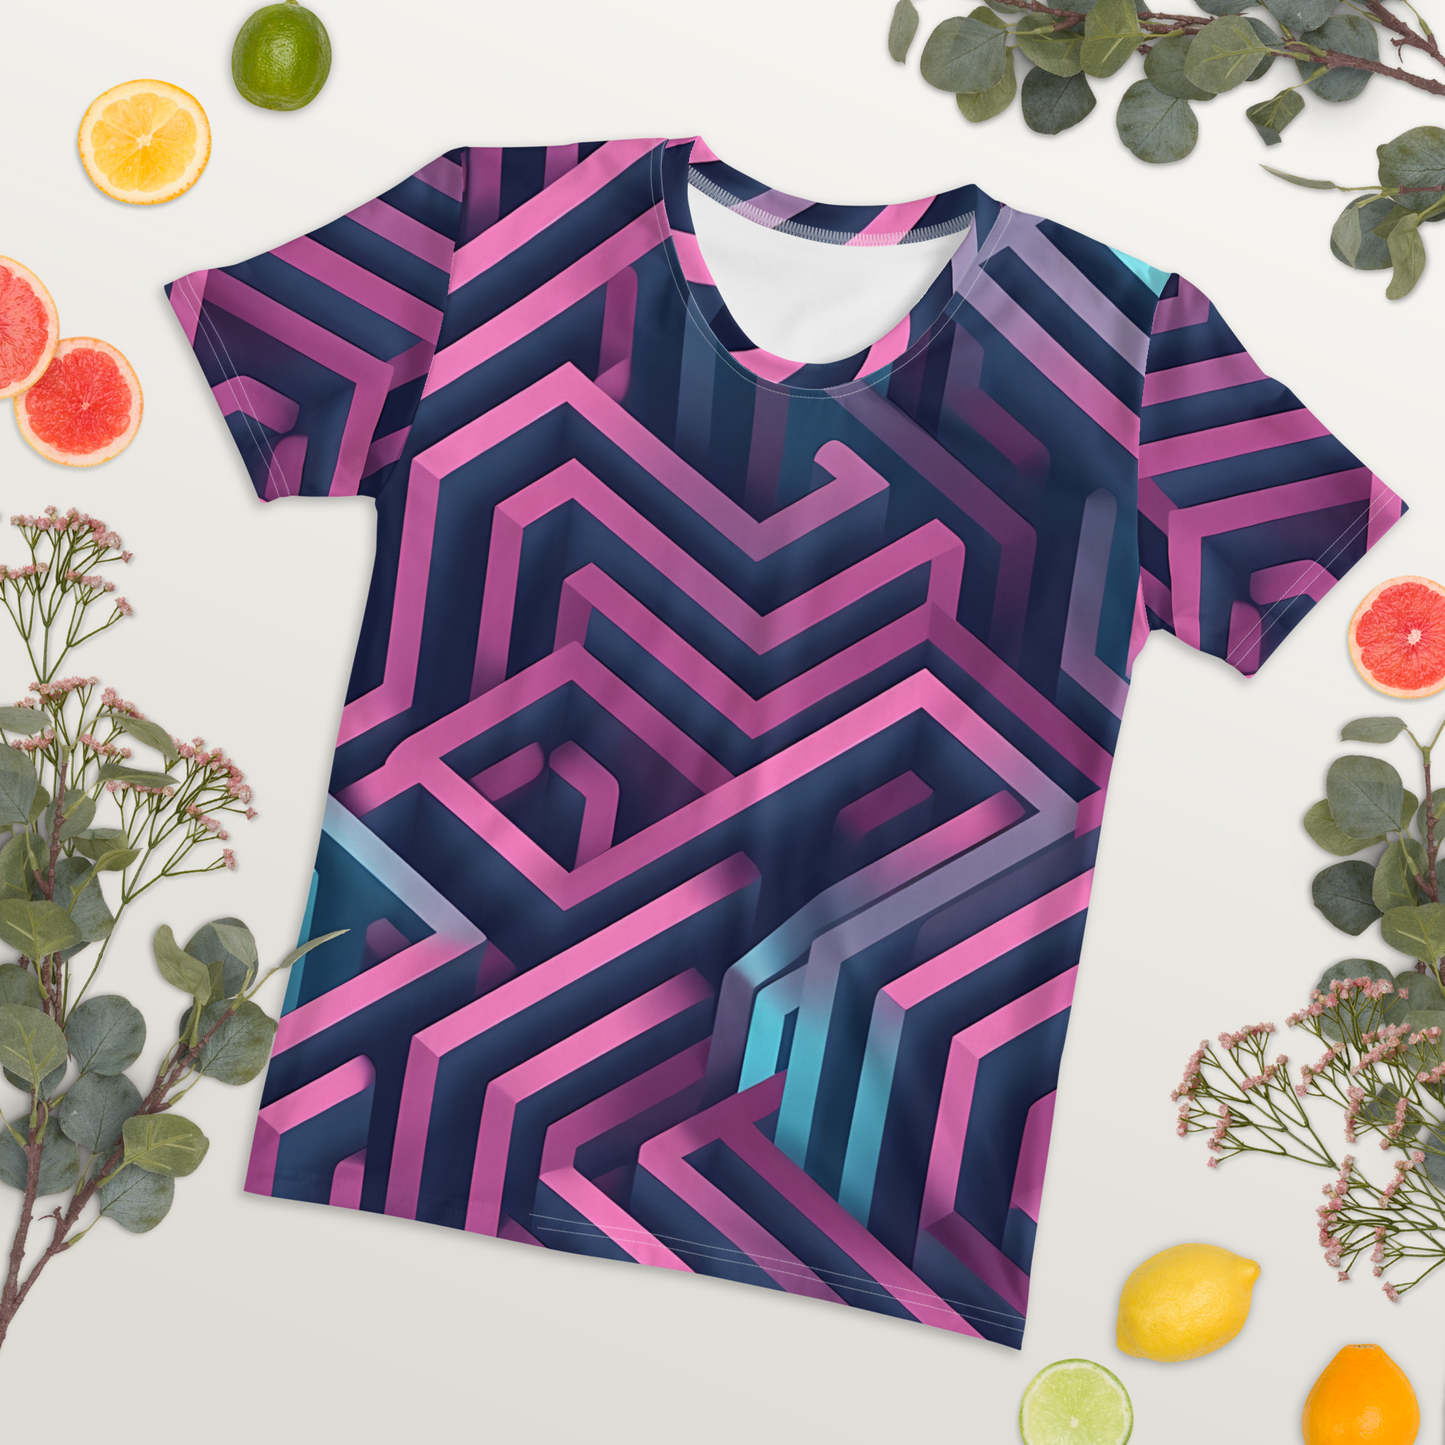 3D Maze Illusion | 3D Patterns | All-Over Print Women's Crew Neck T-Shirt - #4